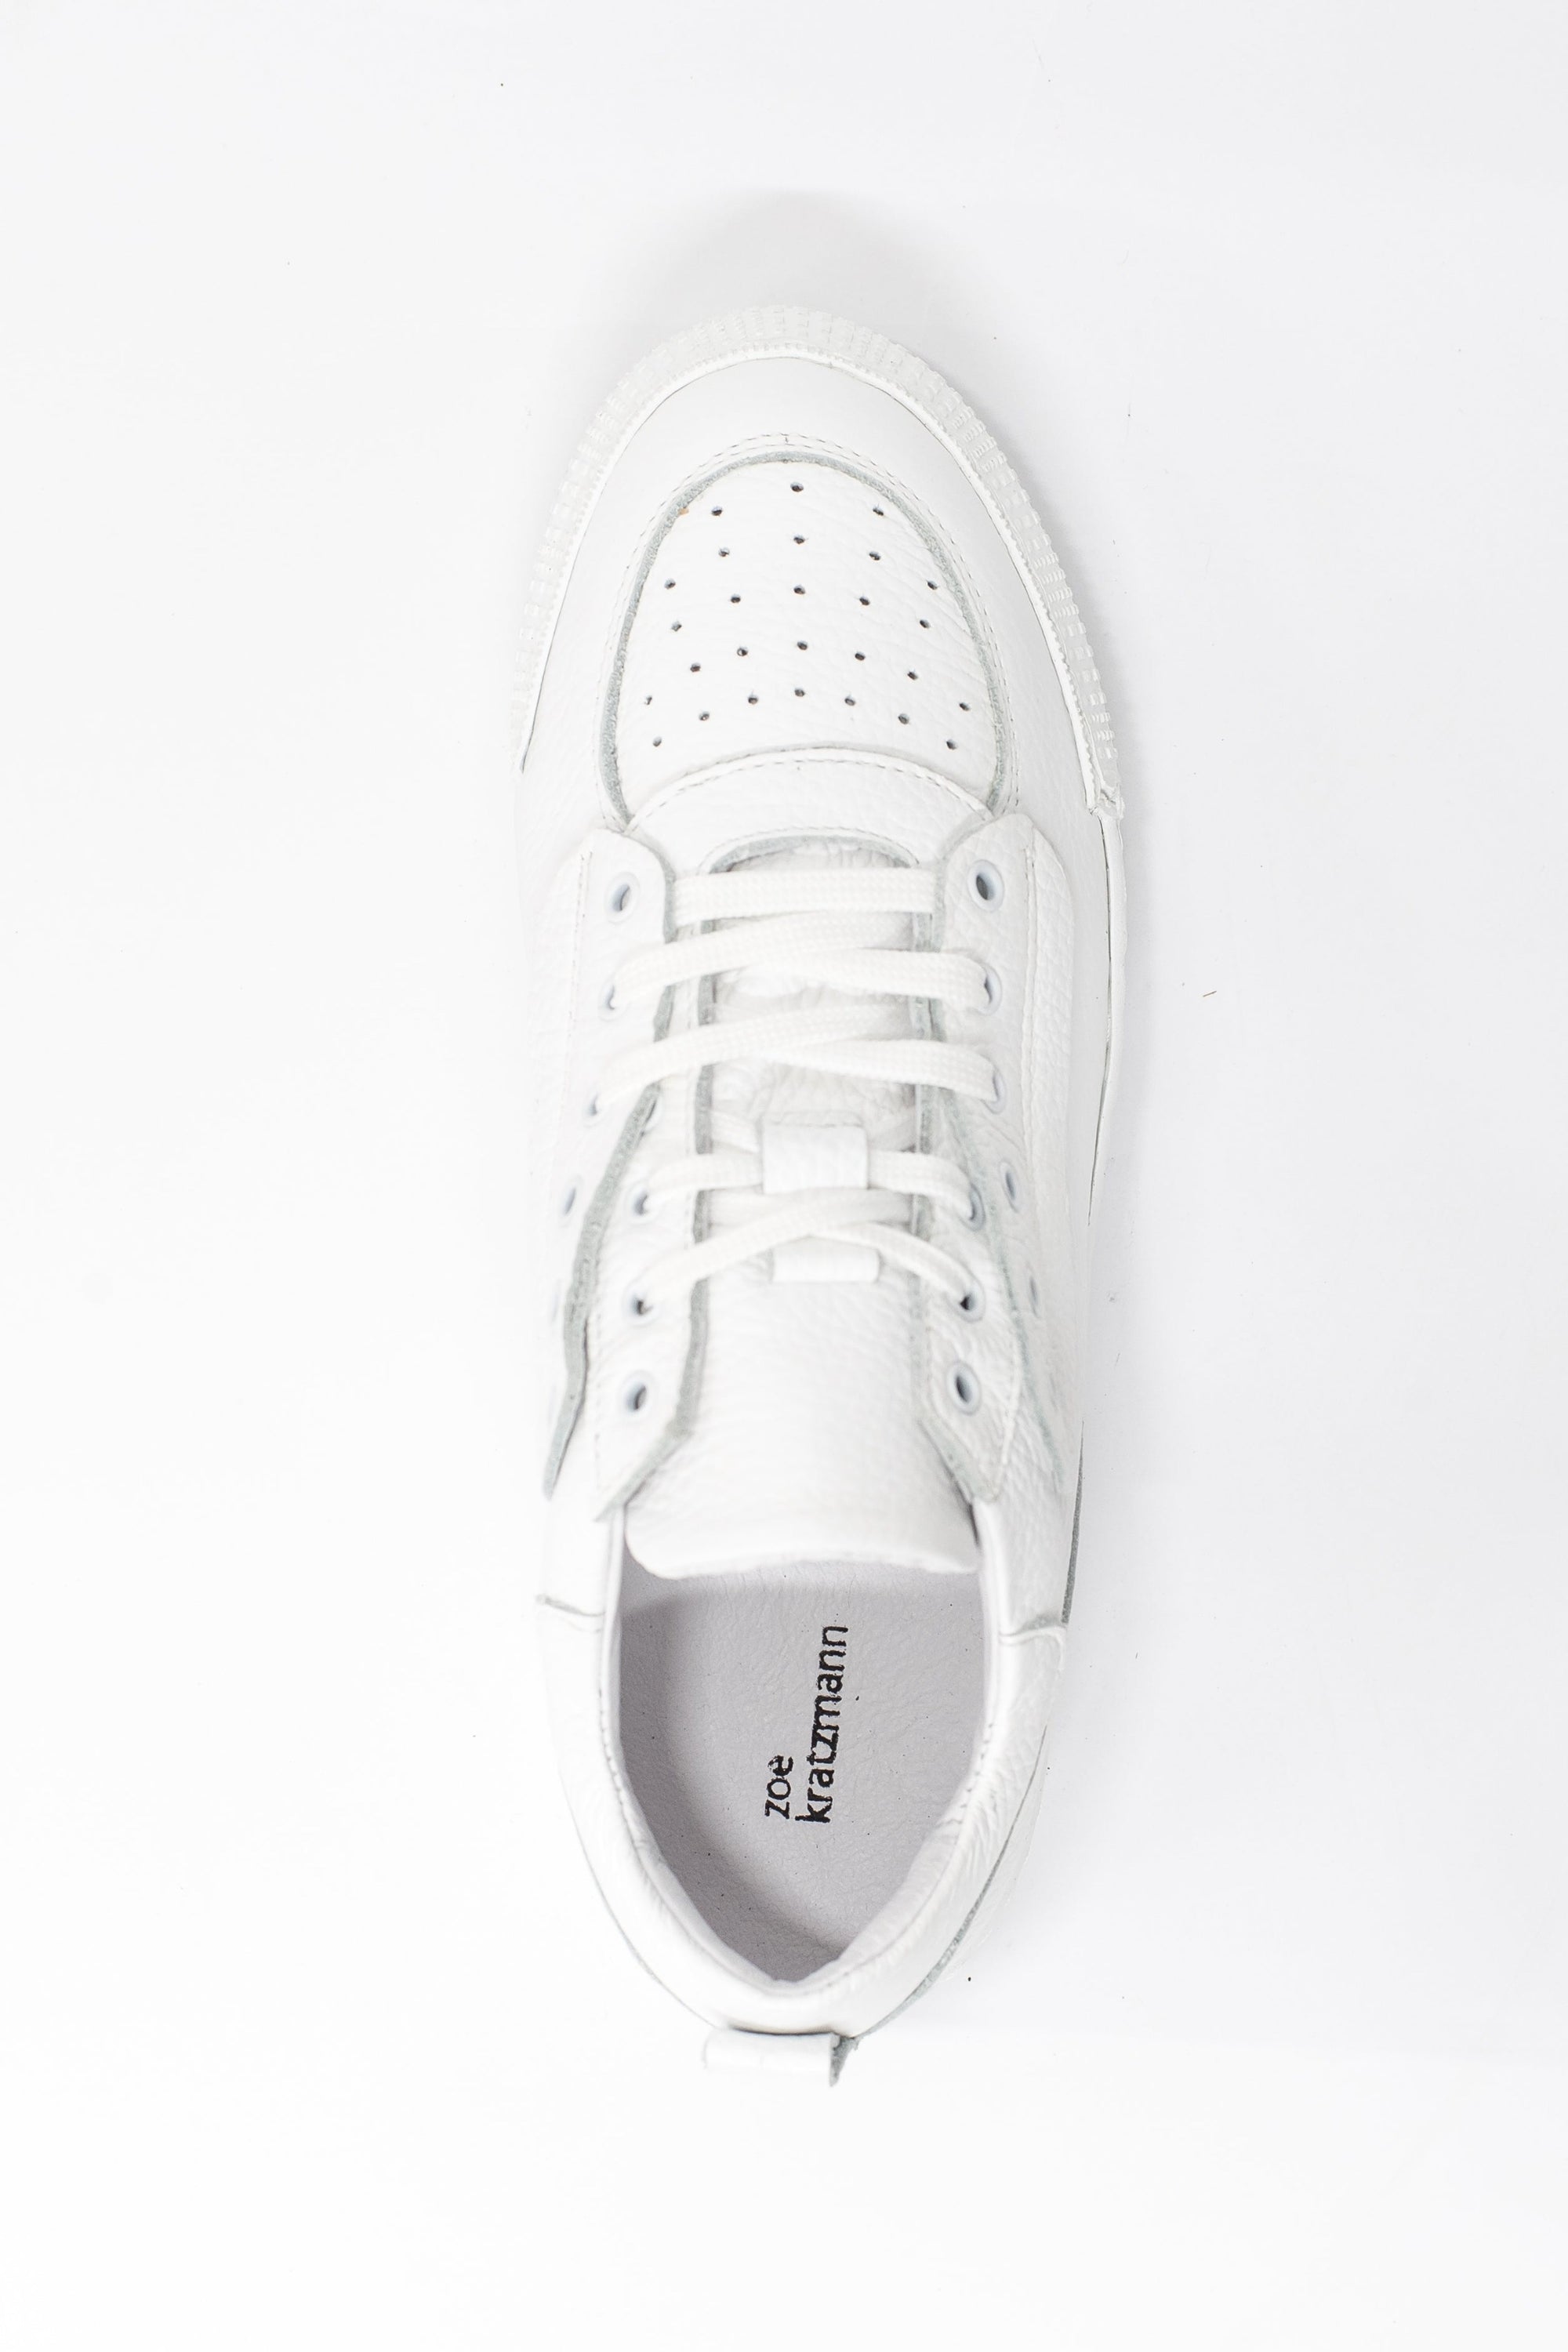 cache sneaker - white leather